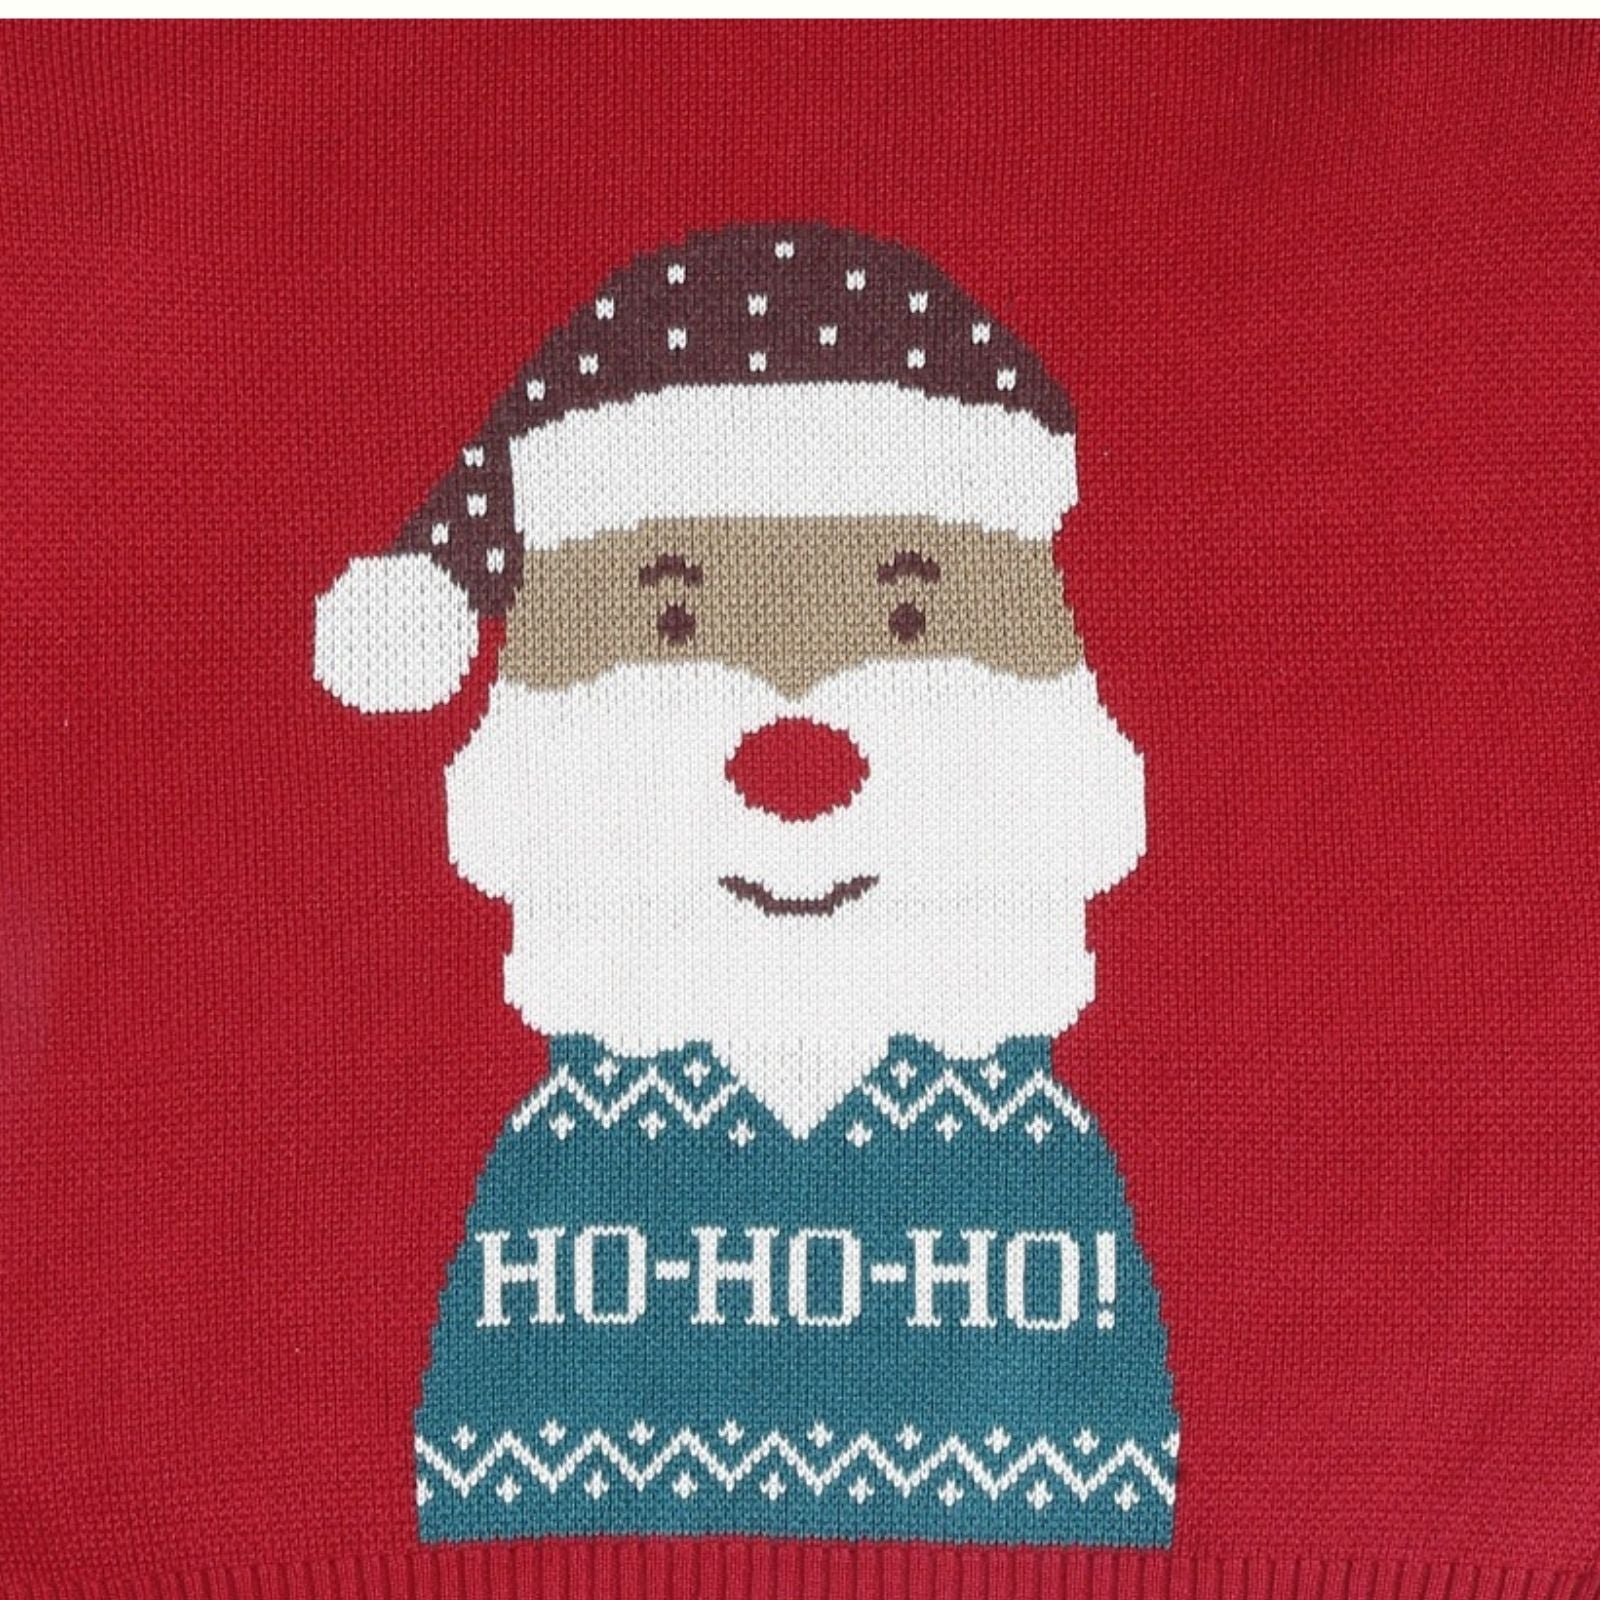 Greendeer Santa & Jaunty/Joyful Reindeer 100% Cotton Sweater with Lower Set of 4